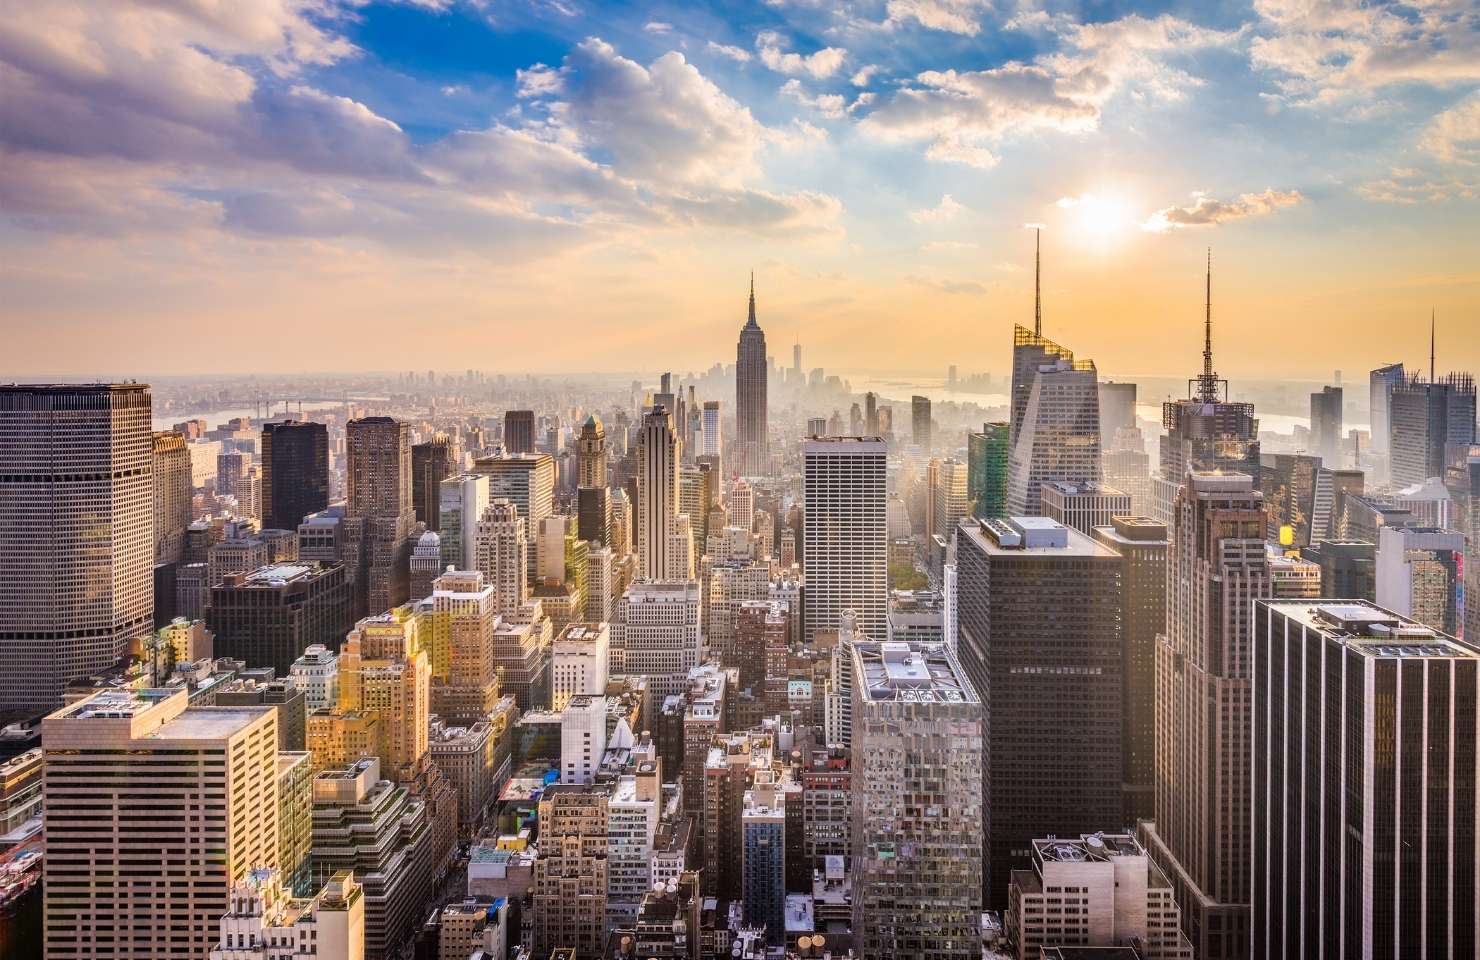 sky line of new york city